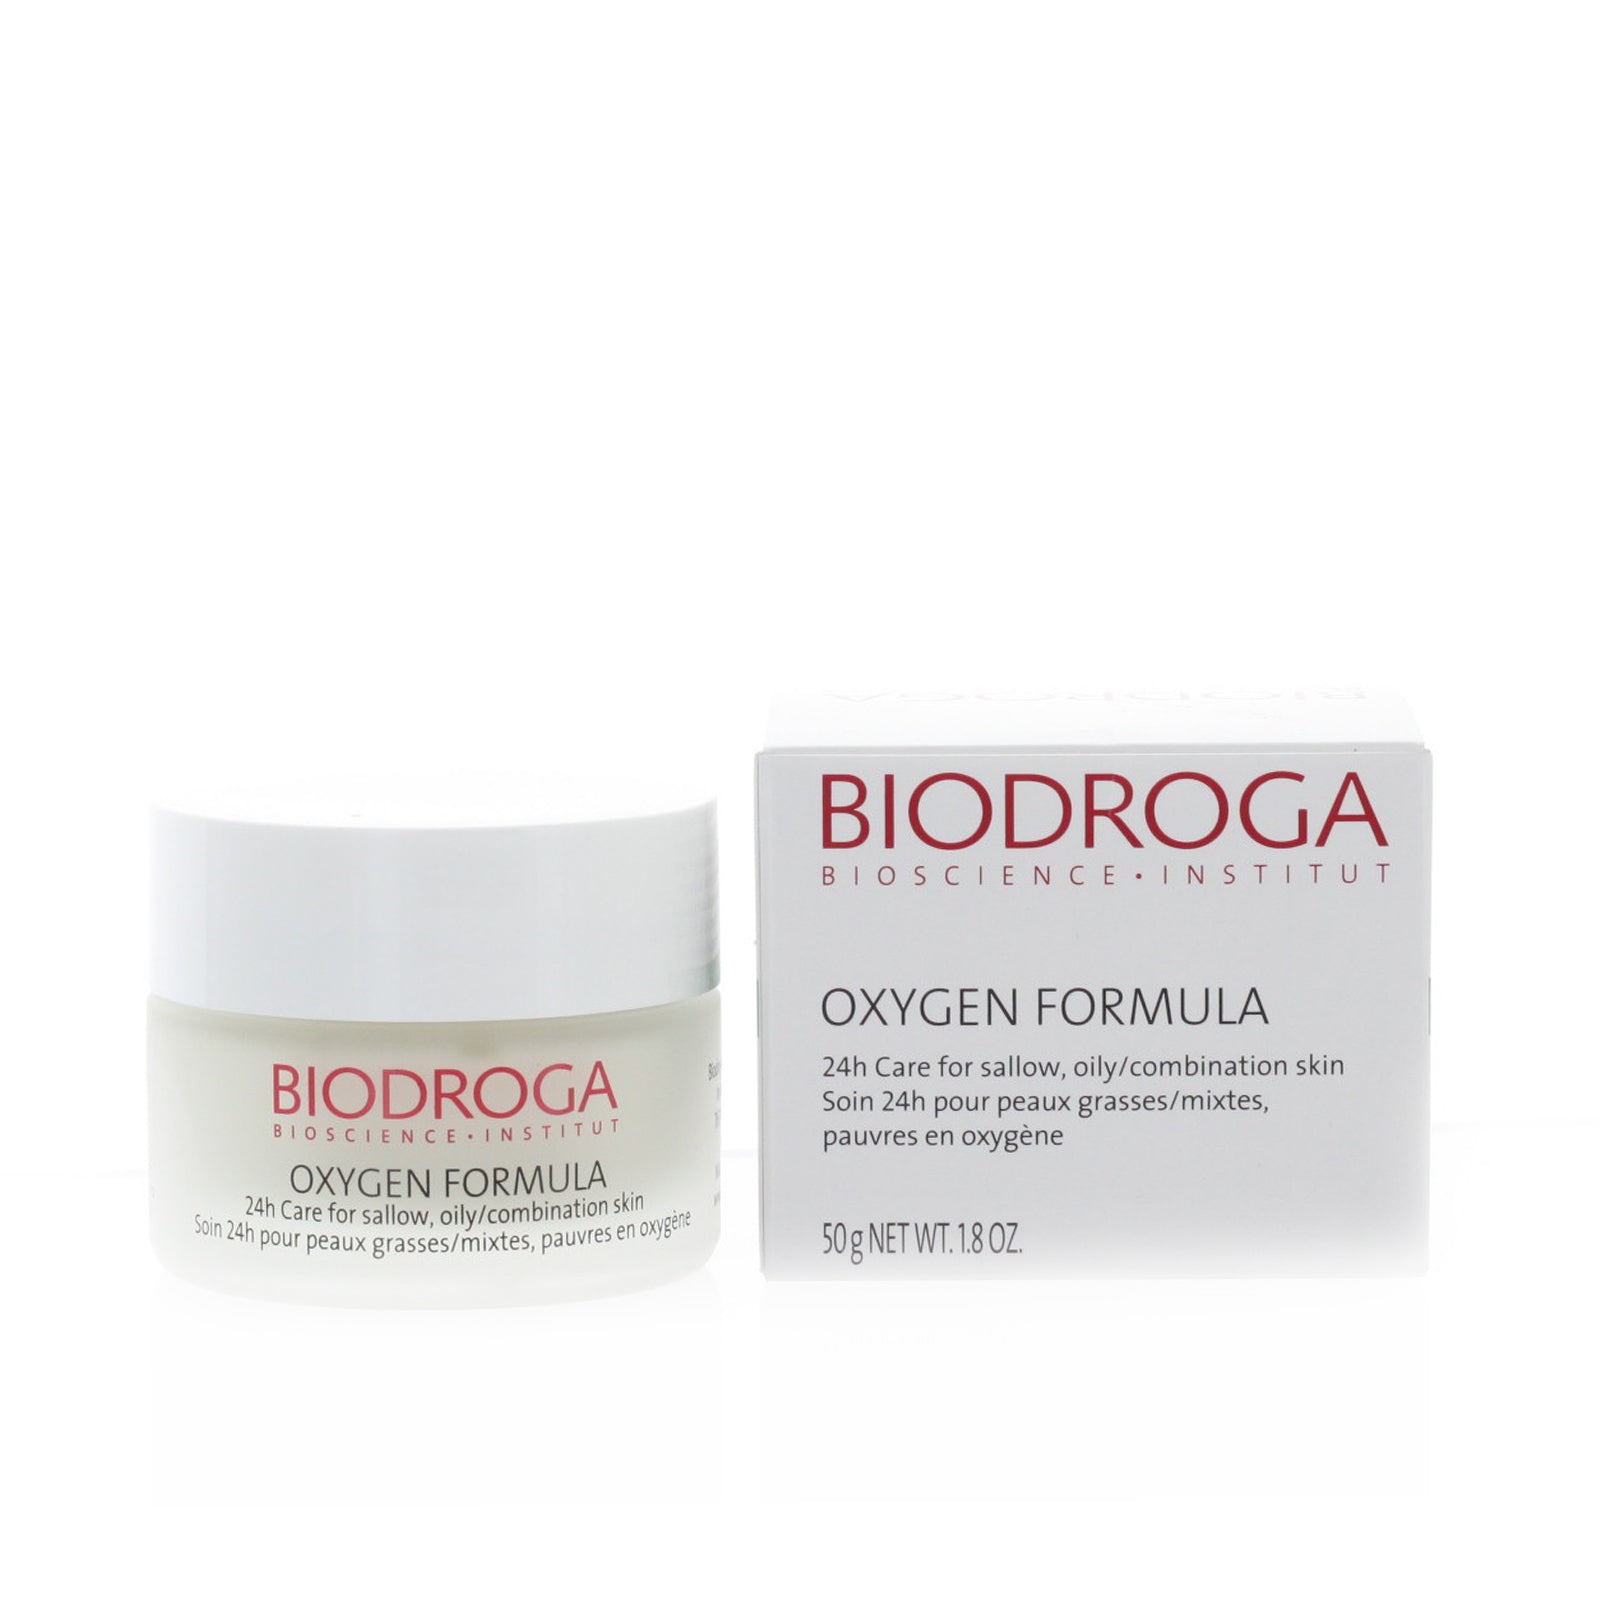 Biodroga Oxygen Formula 24H Care - Oily & Combo Skin 50ml / 1.8oz